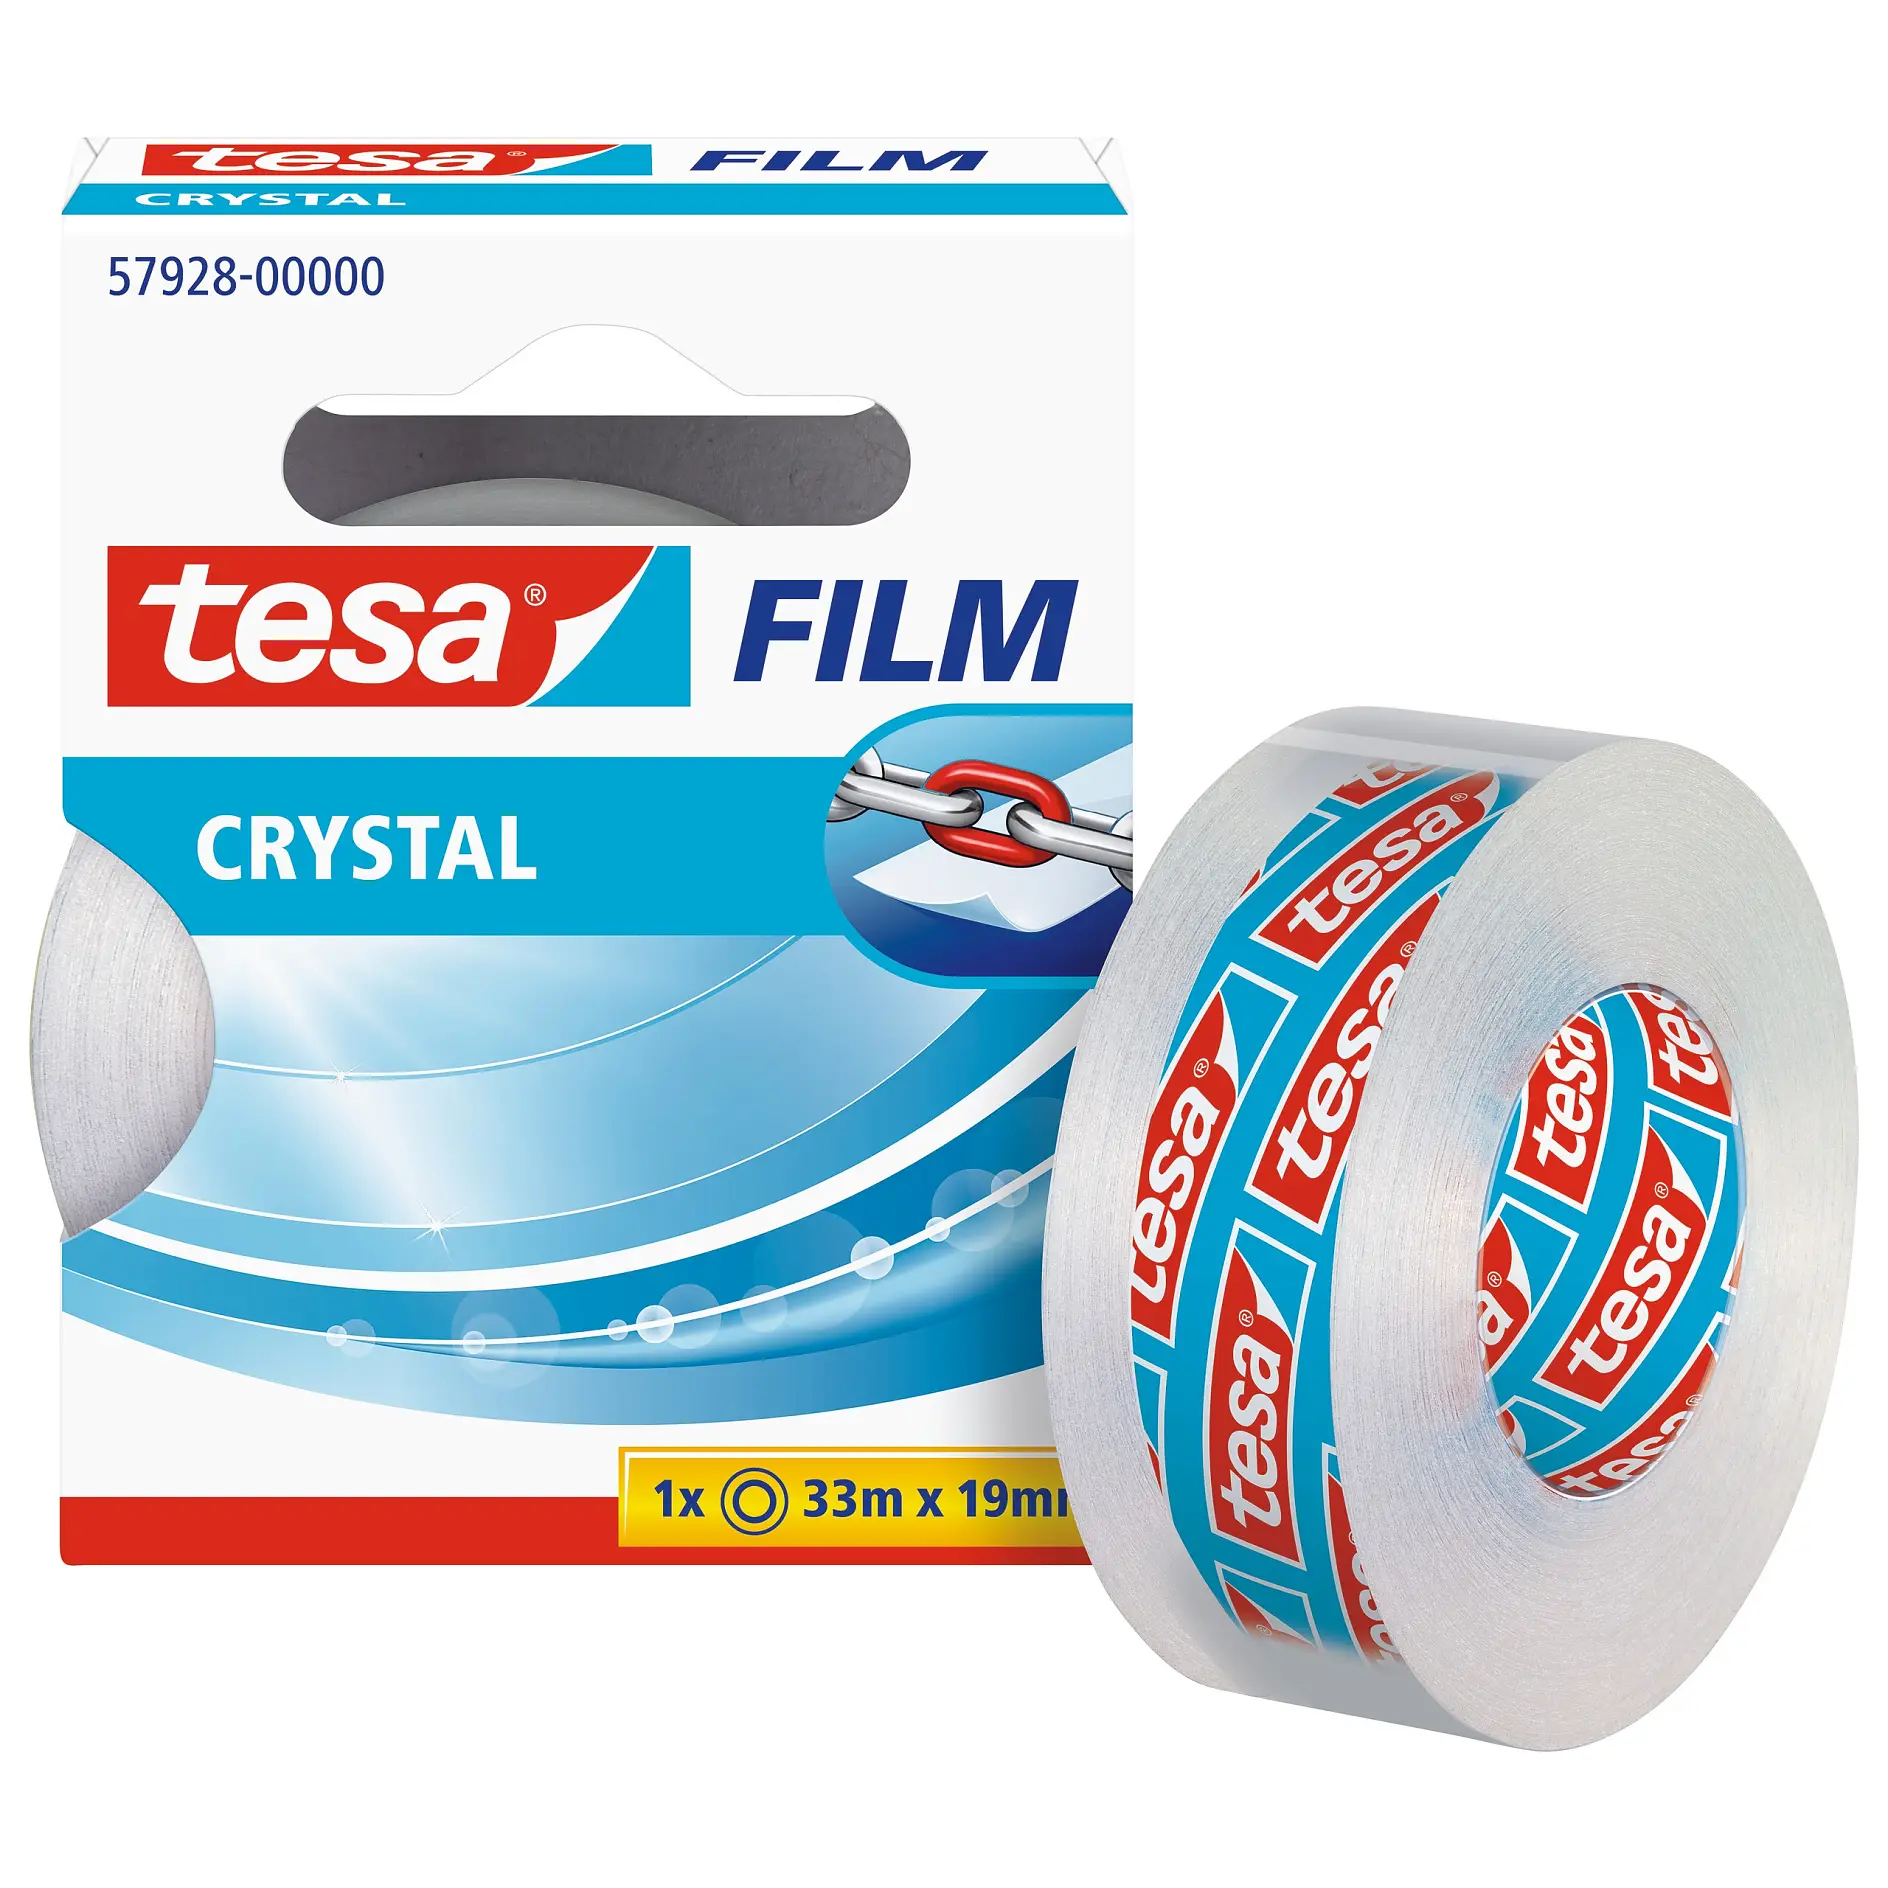 [en-en] 1x tesafilm Crystal 33m x 19mm HFB+ 1x tesafilm Crystal